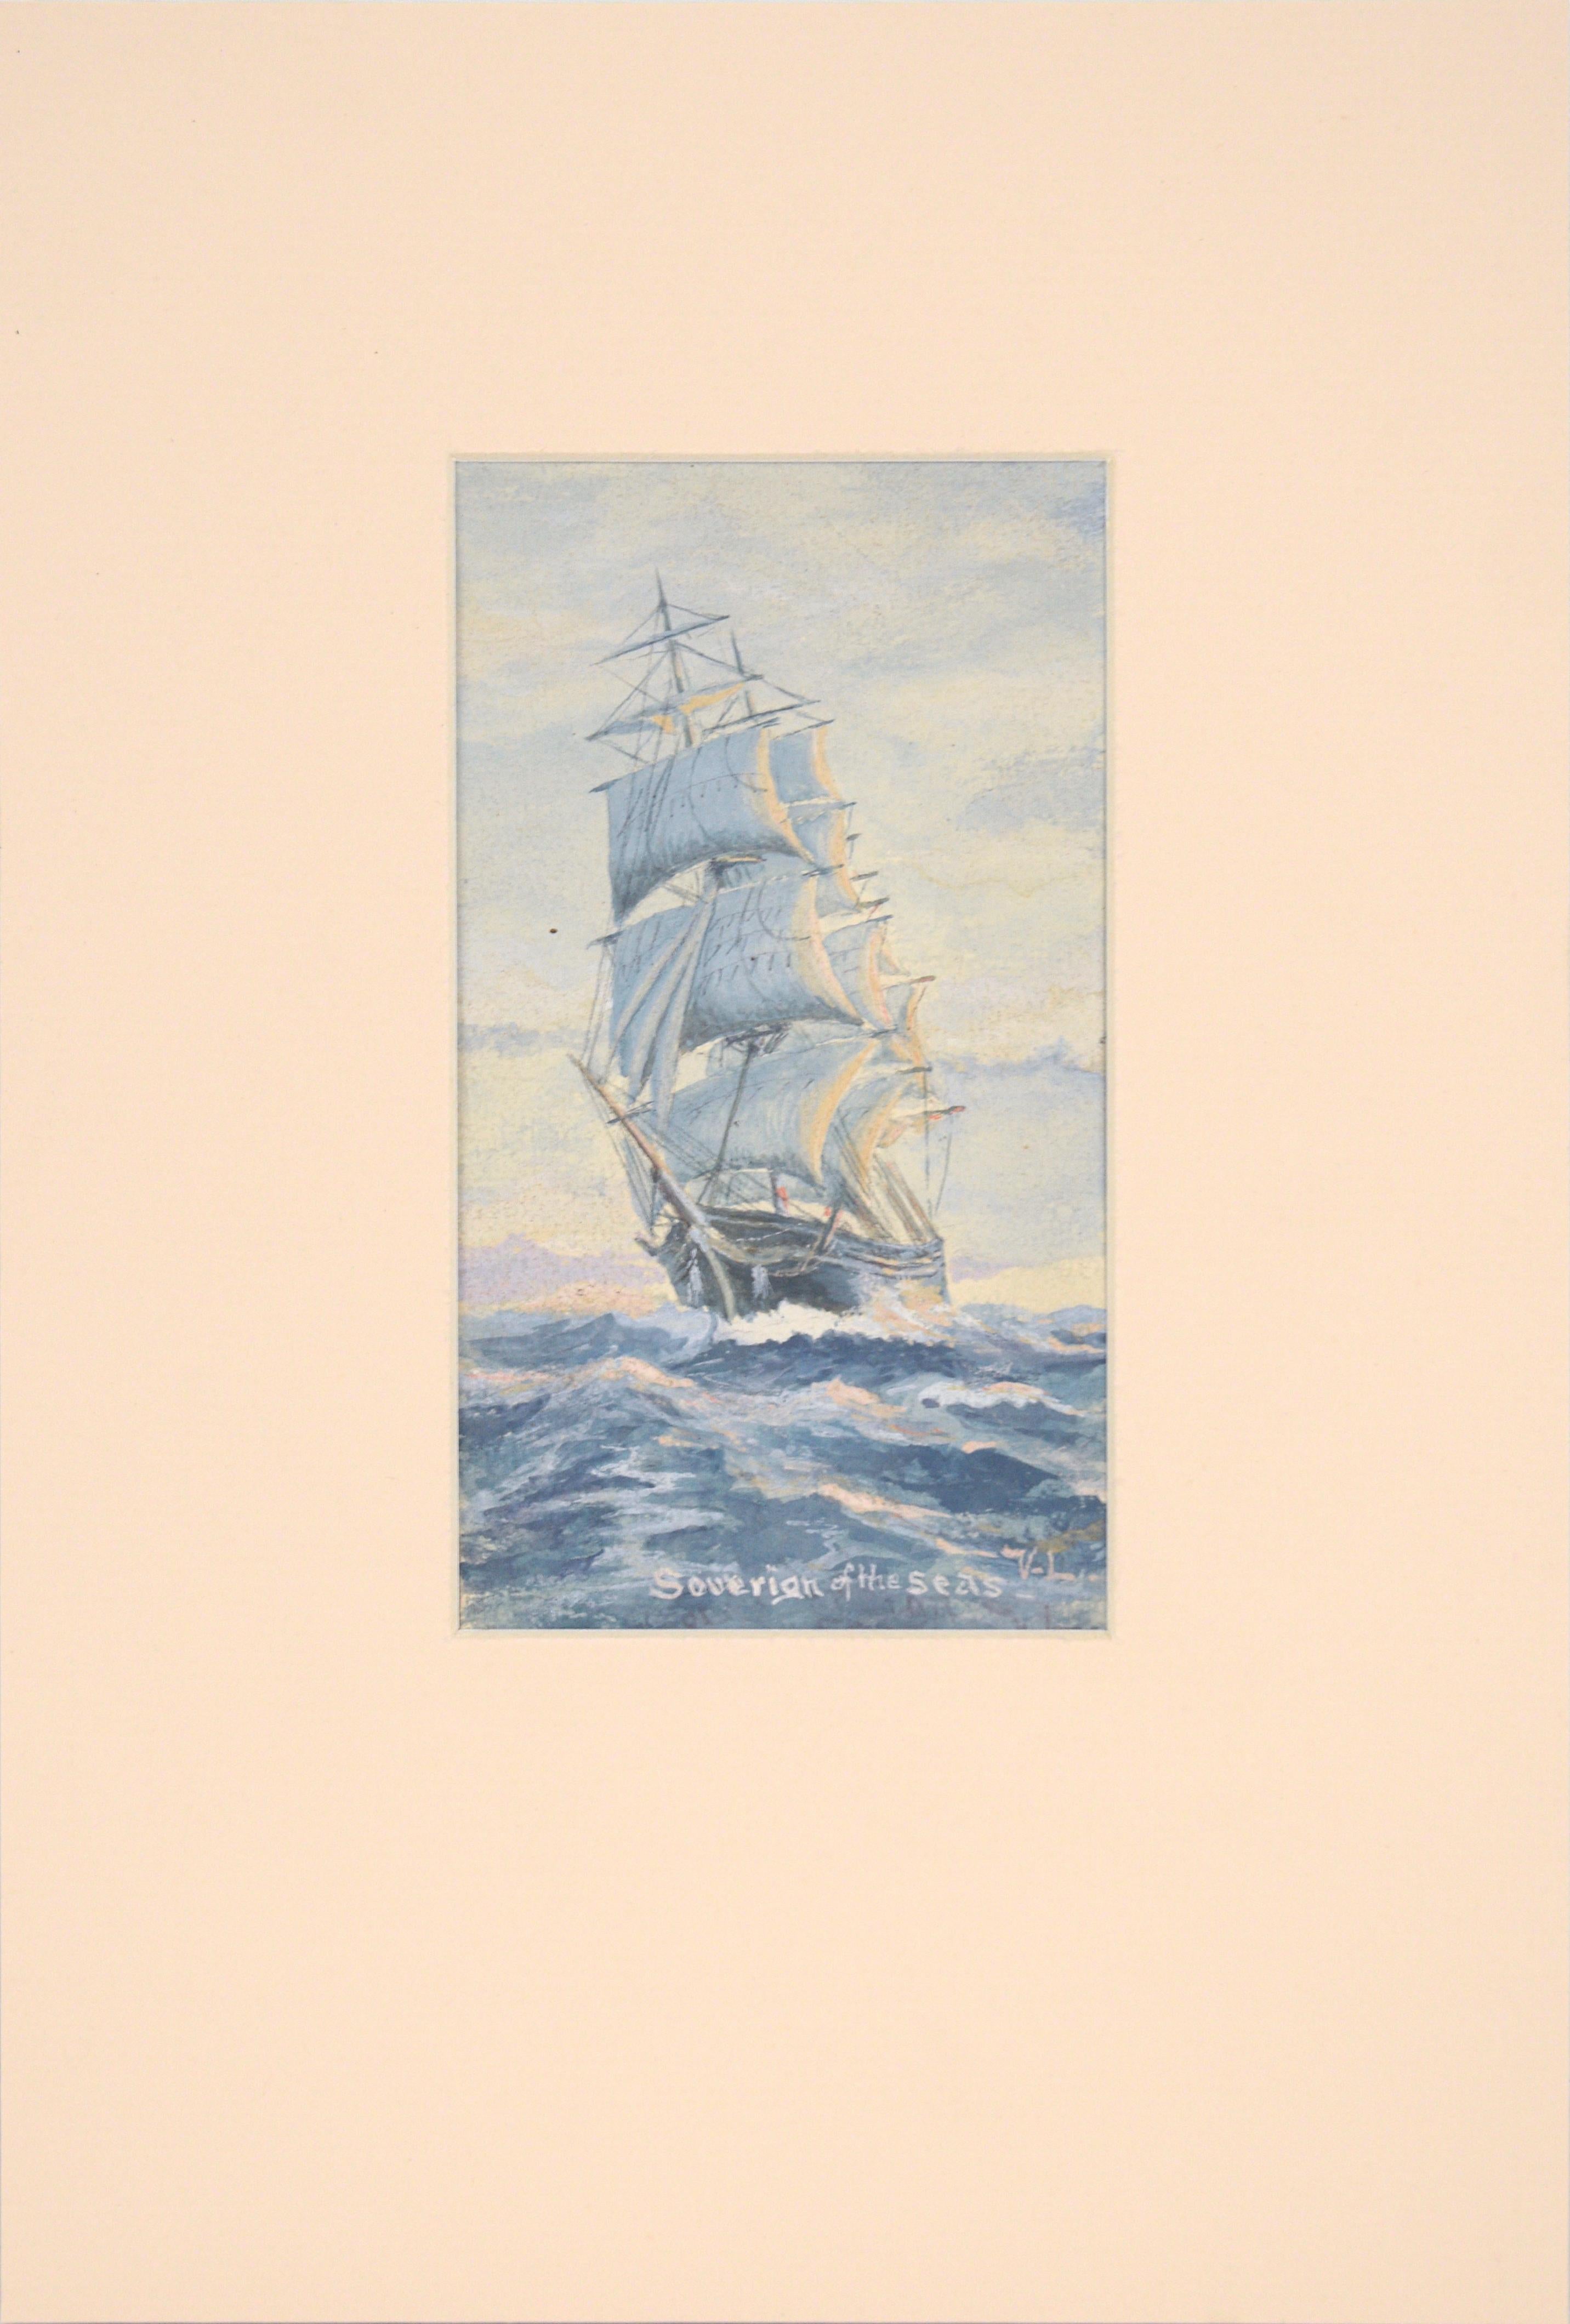 Landscape Painting Victor Lind - "Soverign of the Seas" (Soverign des mers) - paysage marin avec bateau à voile